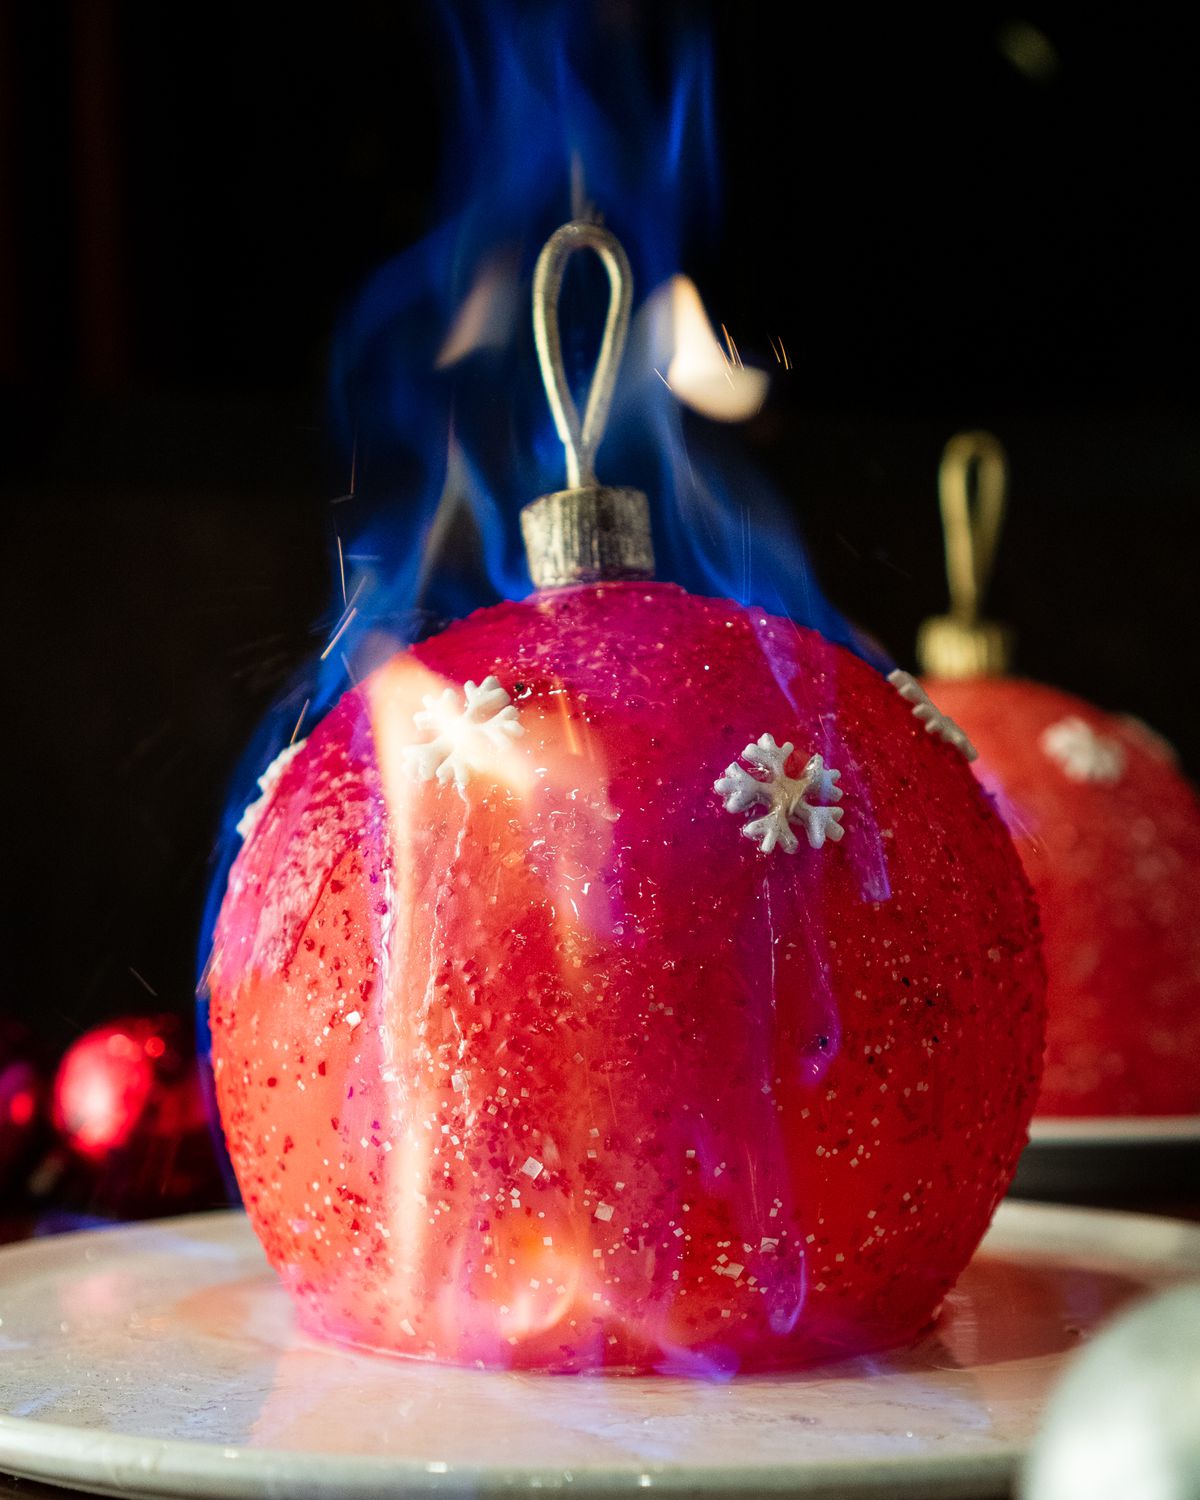 A flaming Christmas tree ornament tartufo